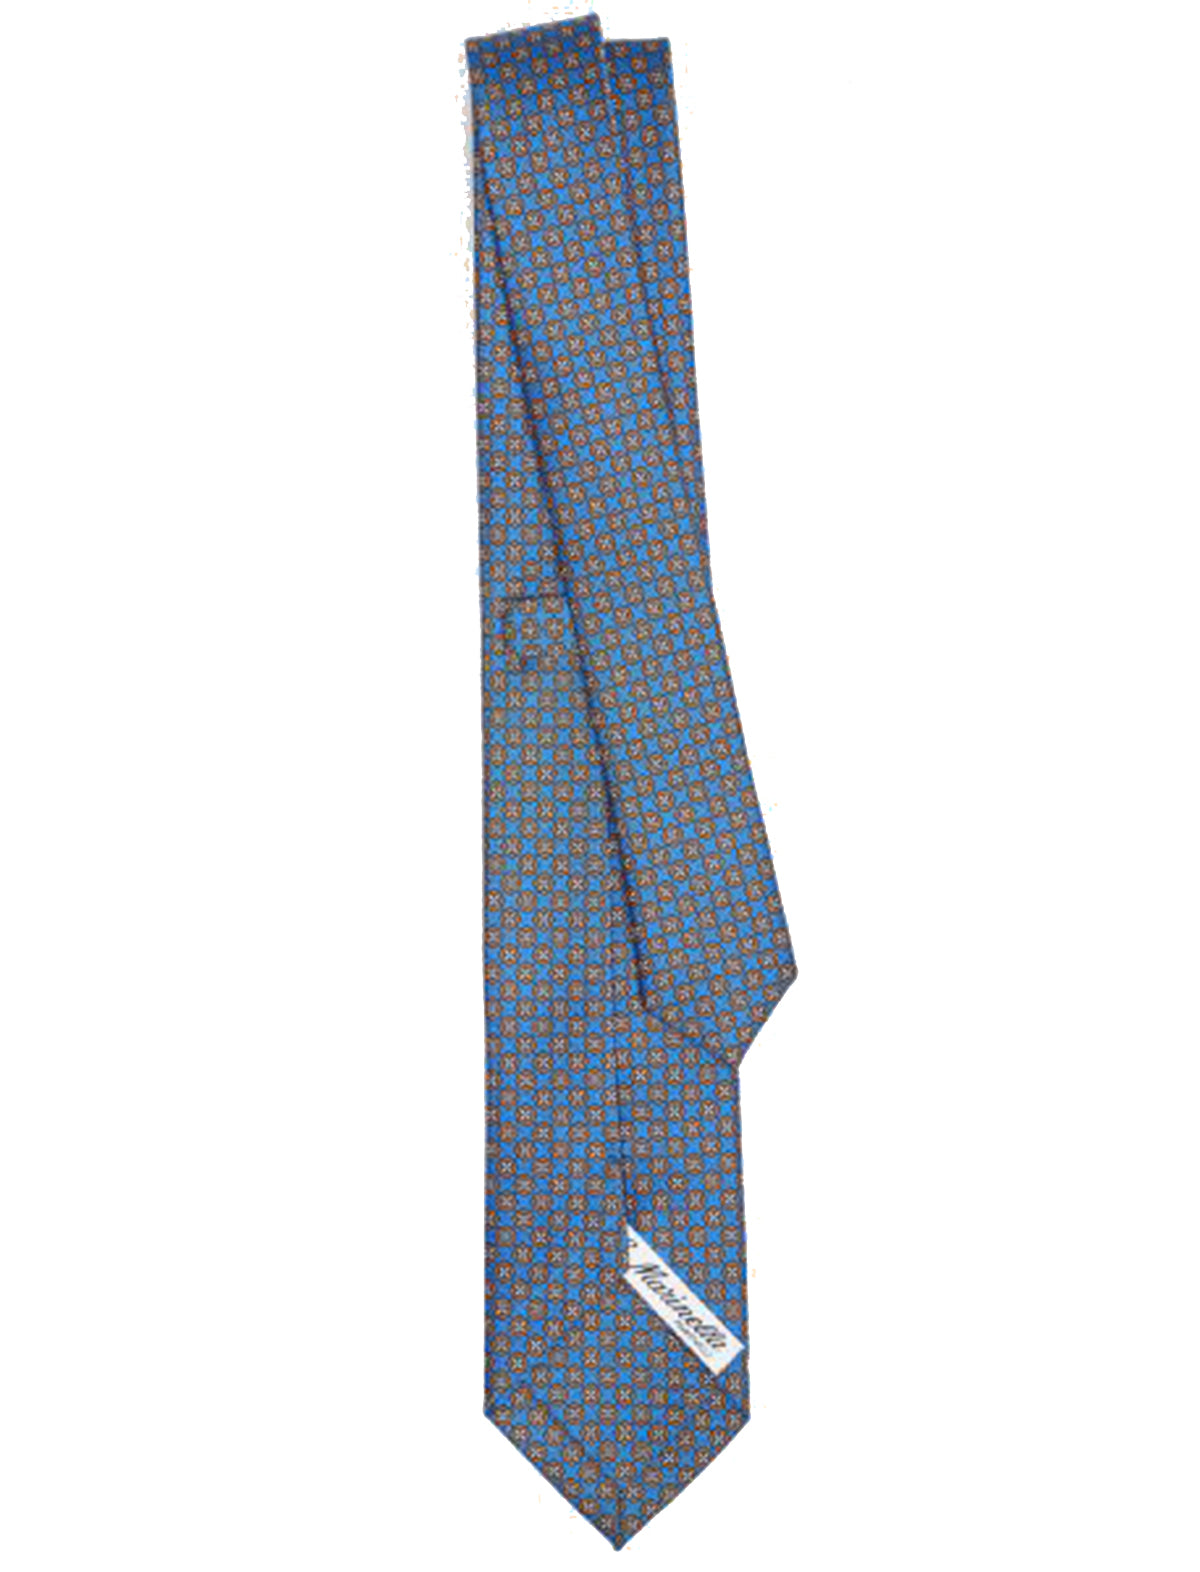 E.Marinella Hand-Printed Silk Tie in Geometric Blue